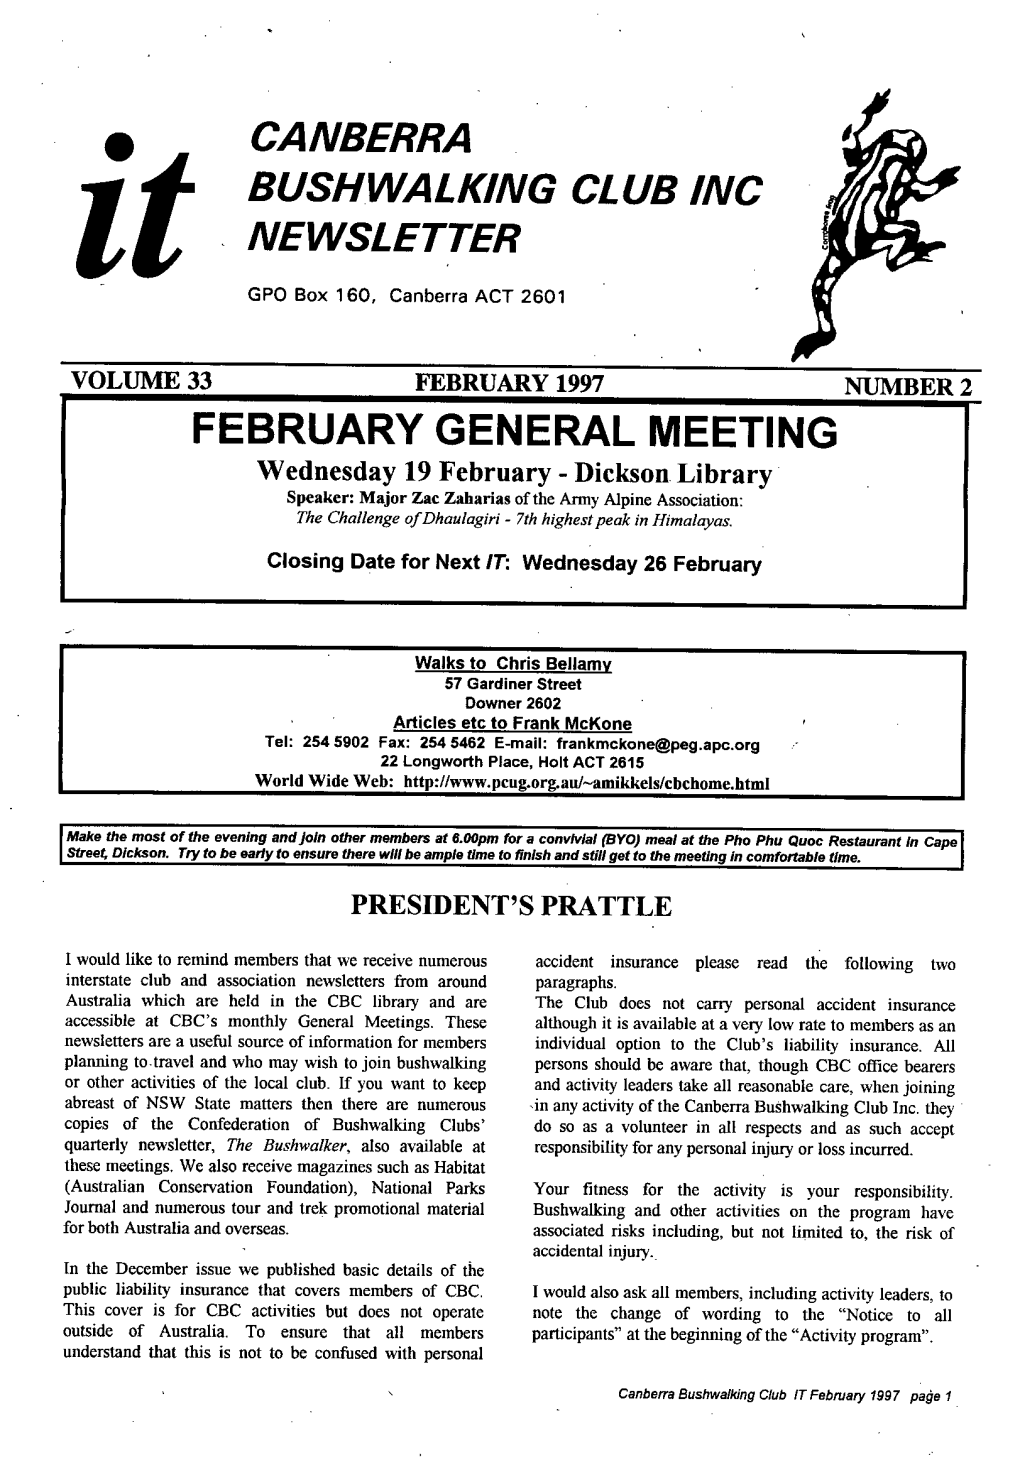 February General Meeting